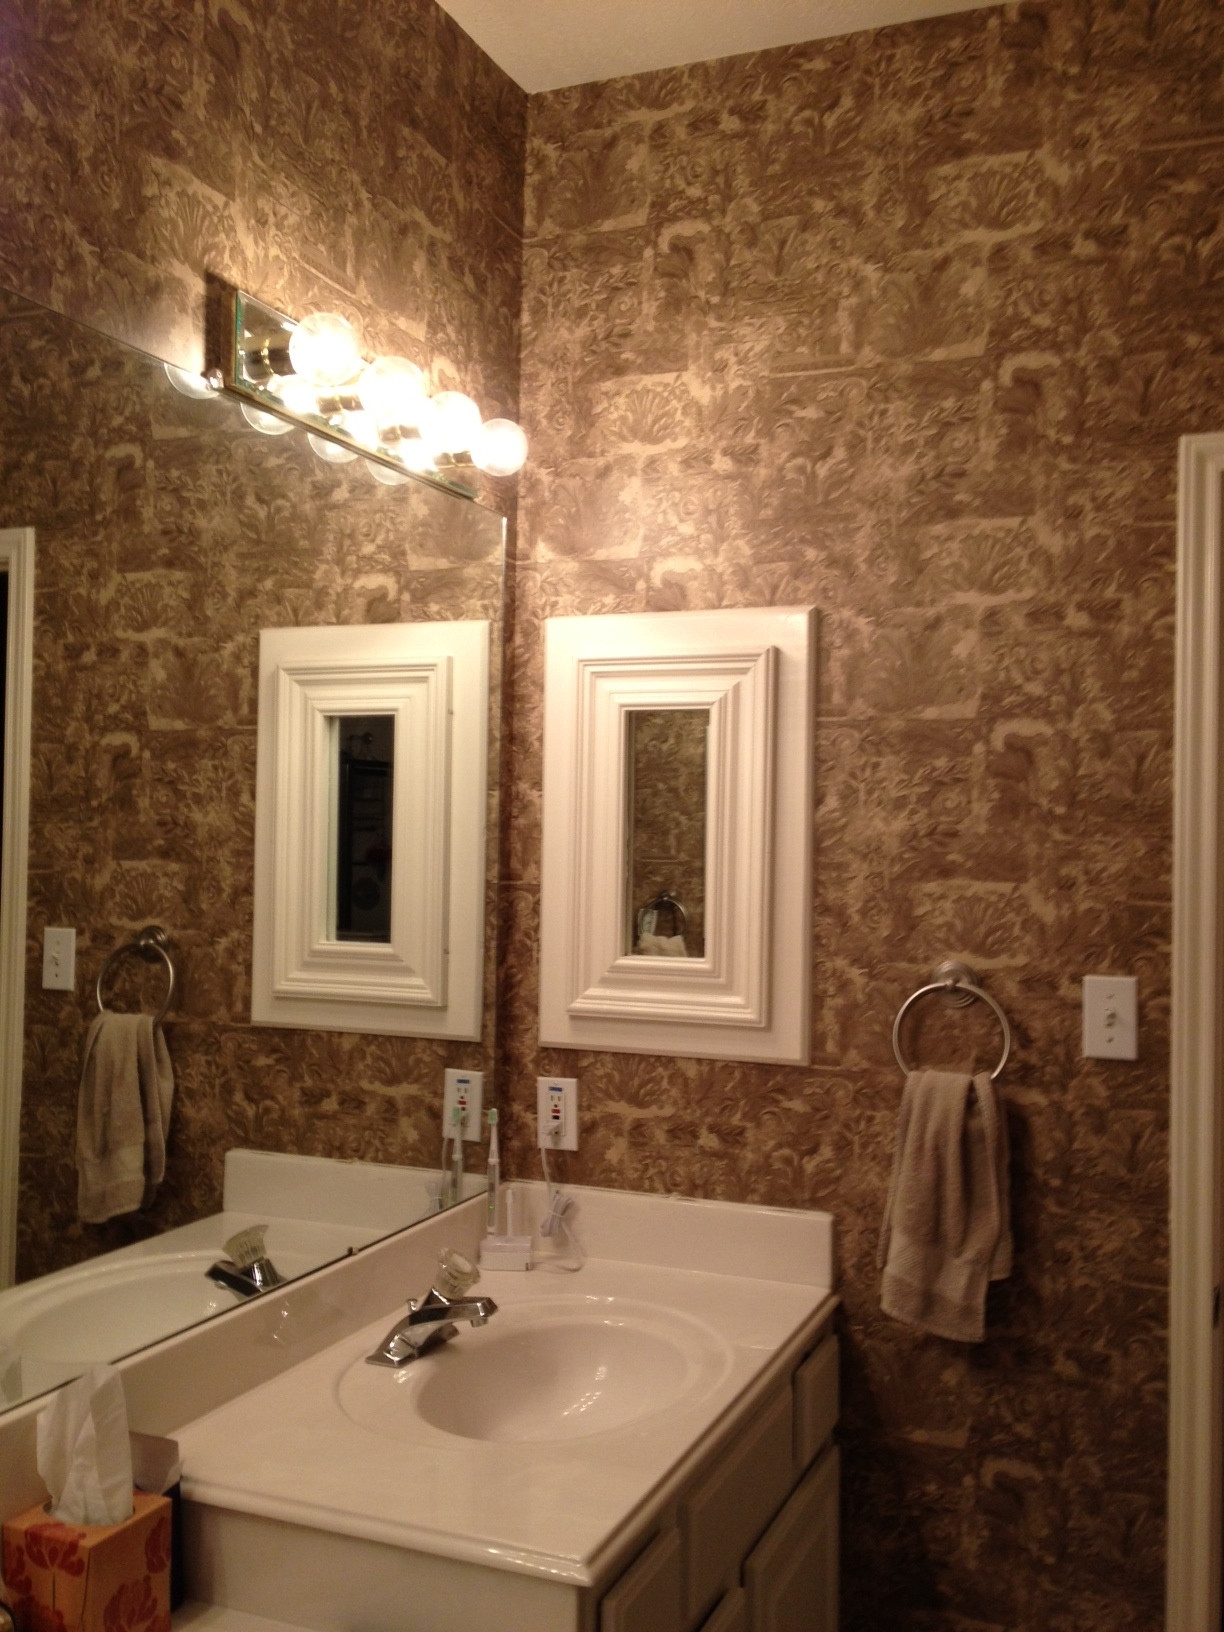 Bathroom Wallpaper Designs
 15 Stunning Bathroom Wallpaper Design Ideas